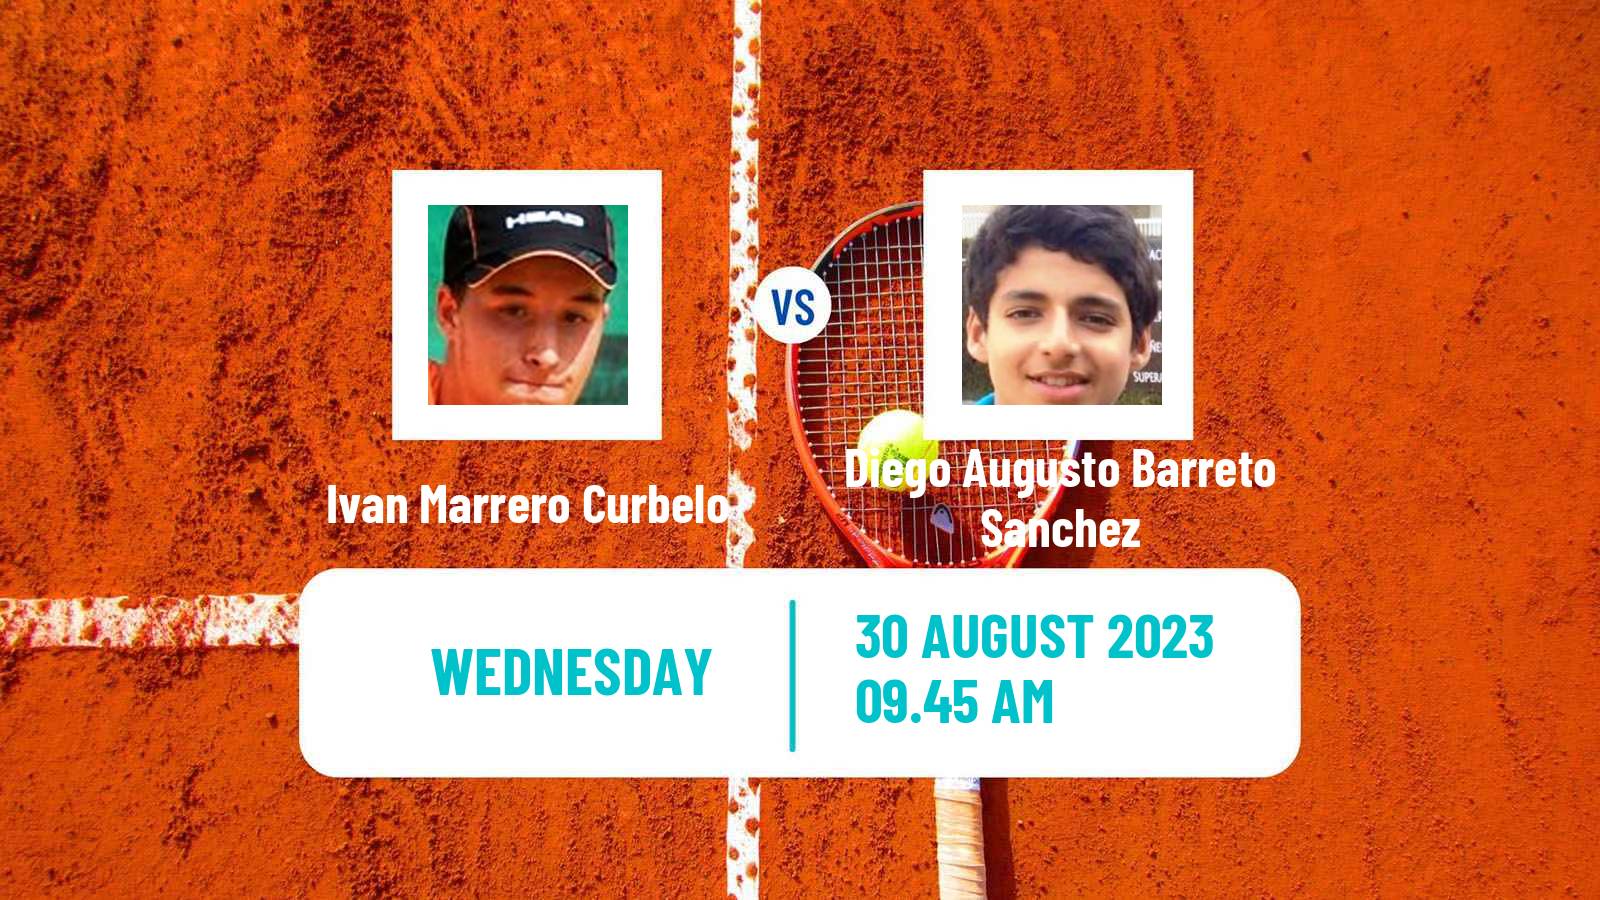 Tennis ITF M25 Oviedo Men Ivan Marrero Curbelo - Diego Augusto Barreto Sanchez